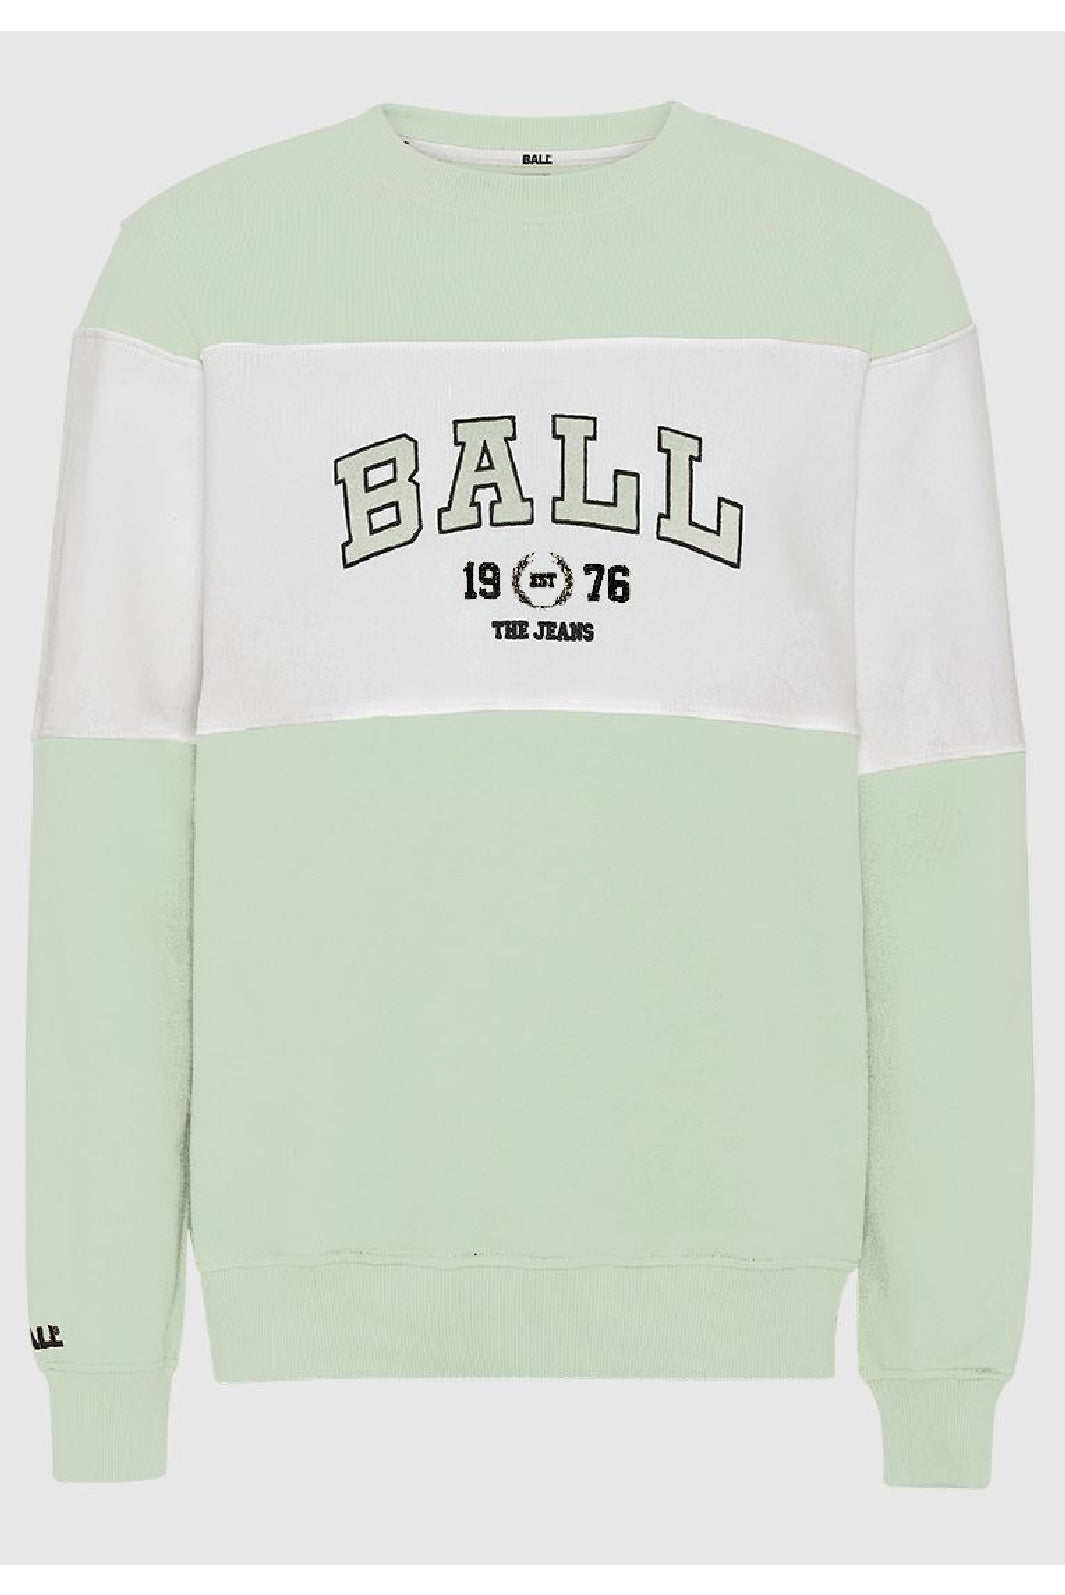 Ball - Sweatshirt J. Montana - Mint Sweatshirts 